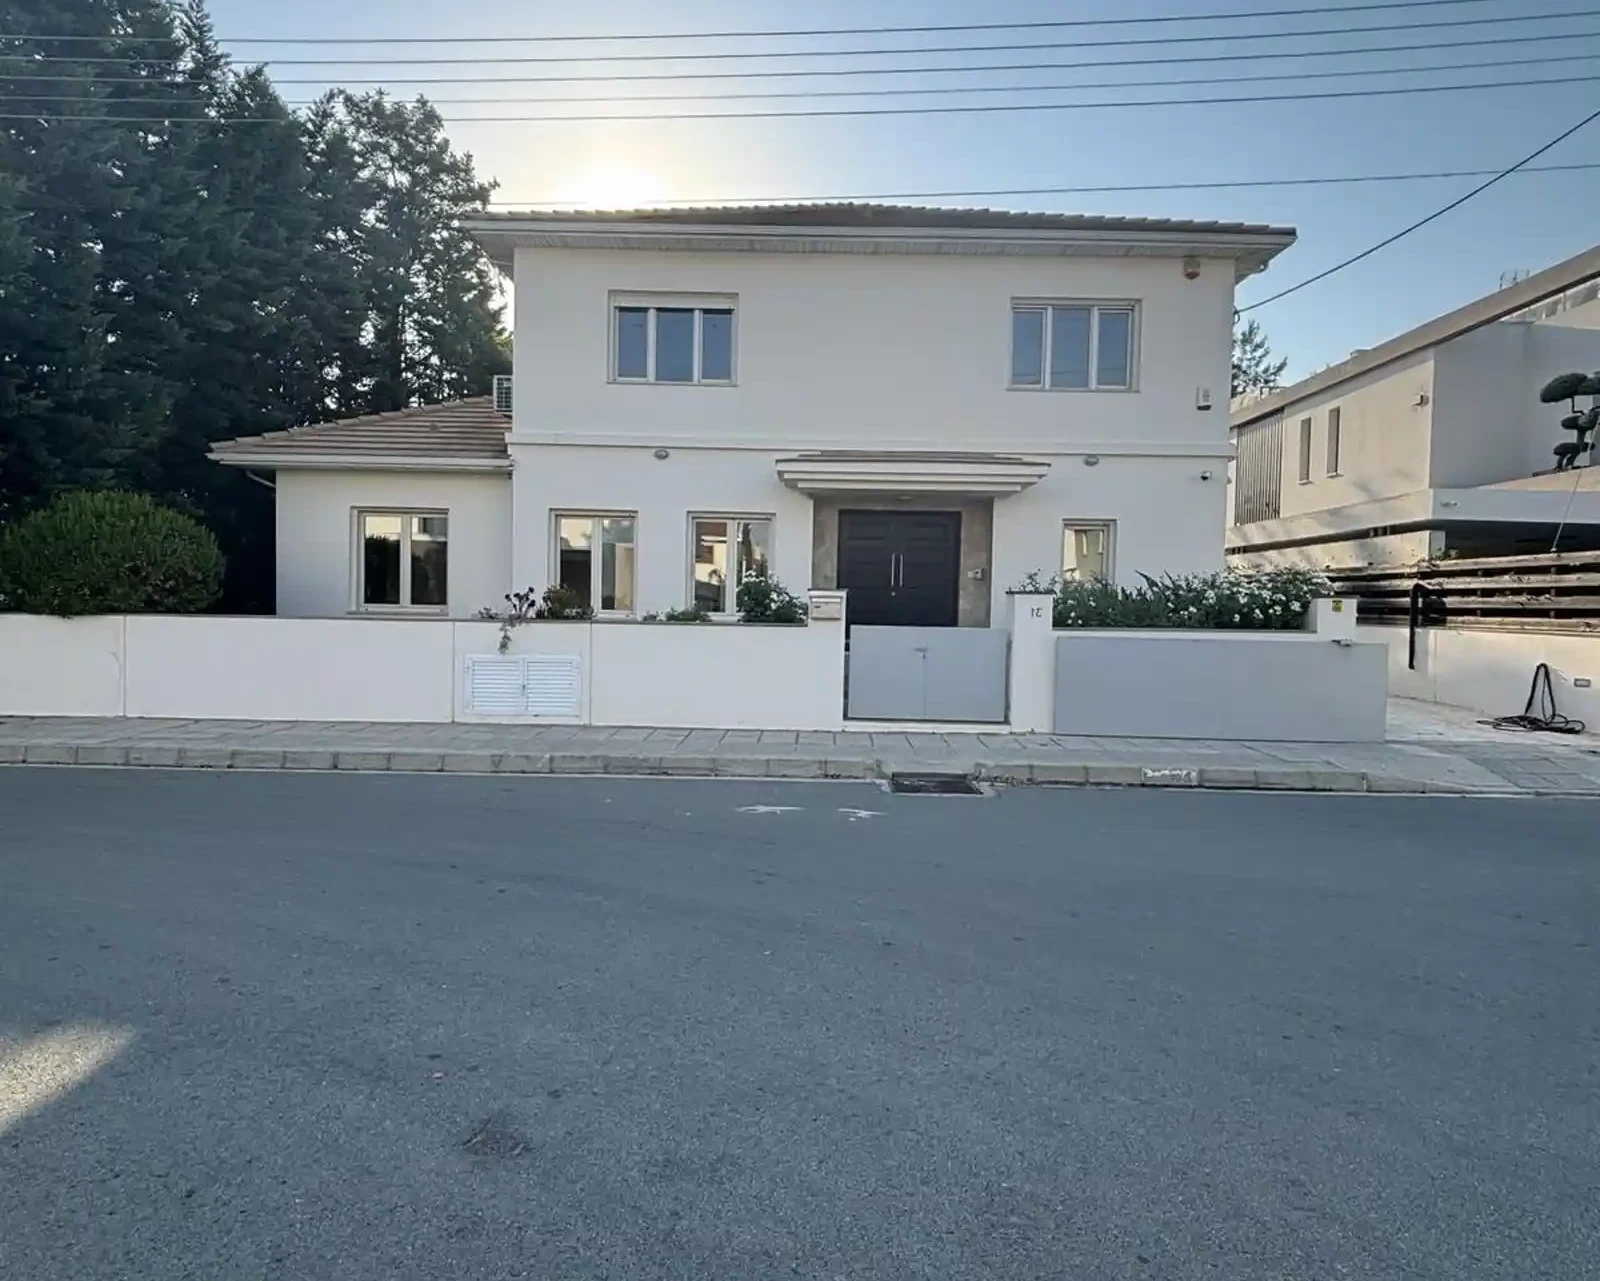 5-bedroom villa fоr sаle €850.000, image 1